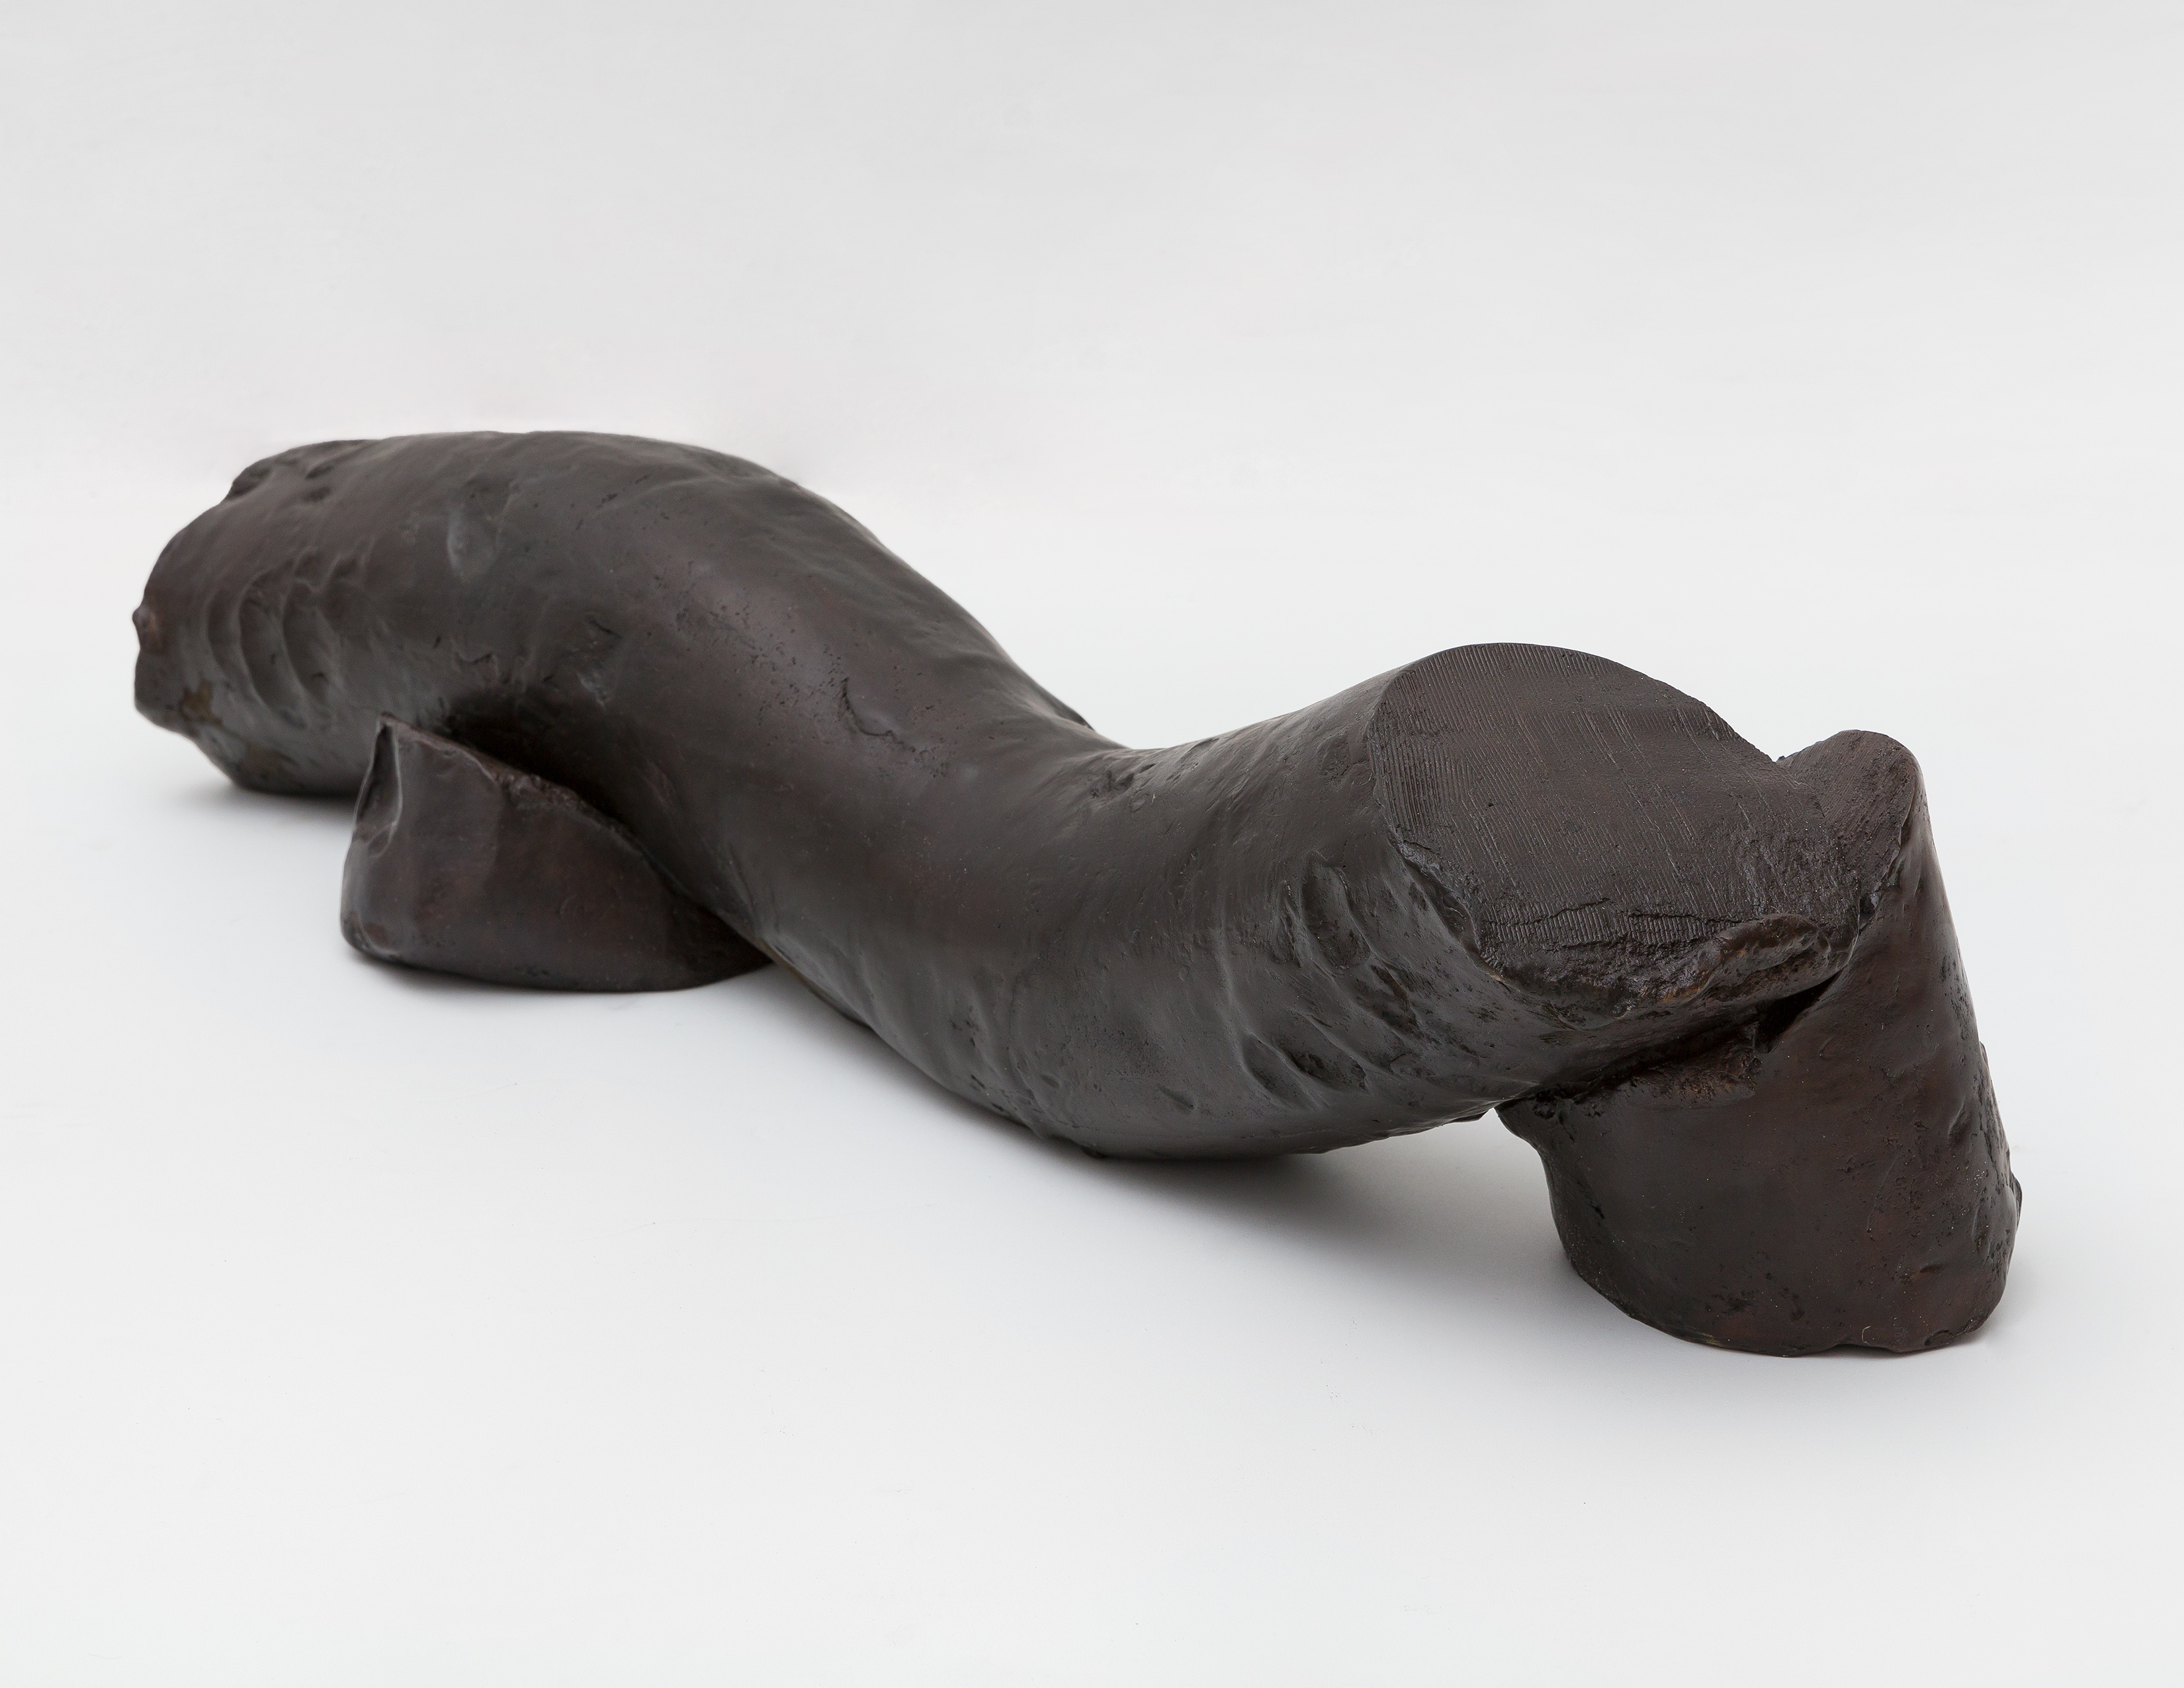 Paulo Monteiro's Untitled patinated bronze sculpture